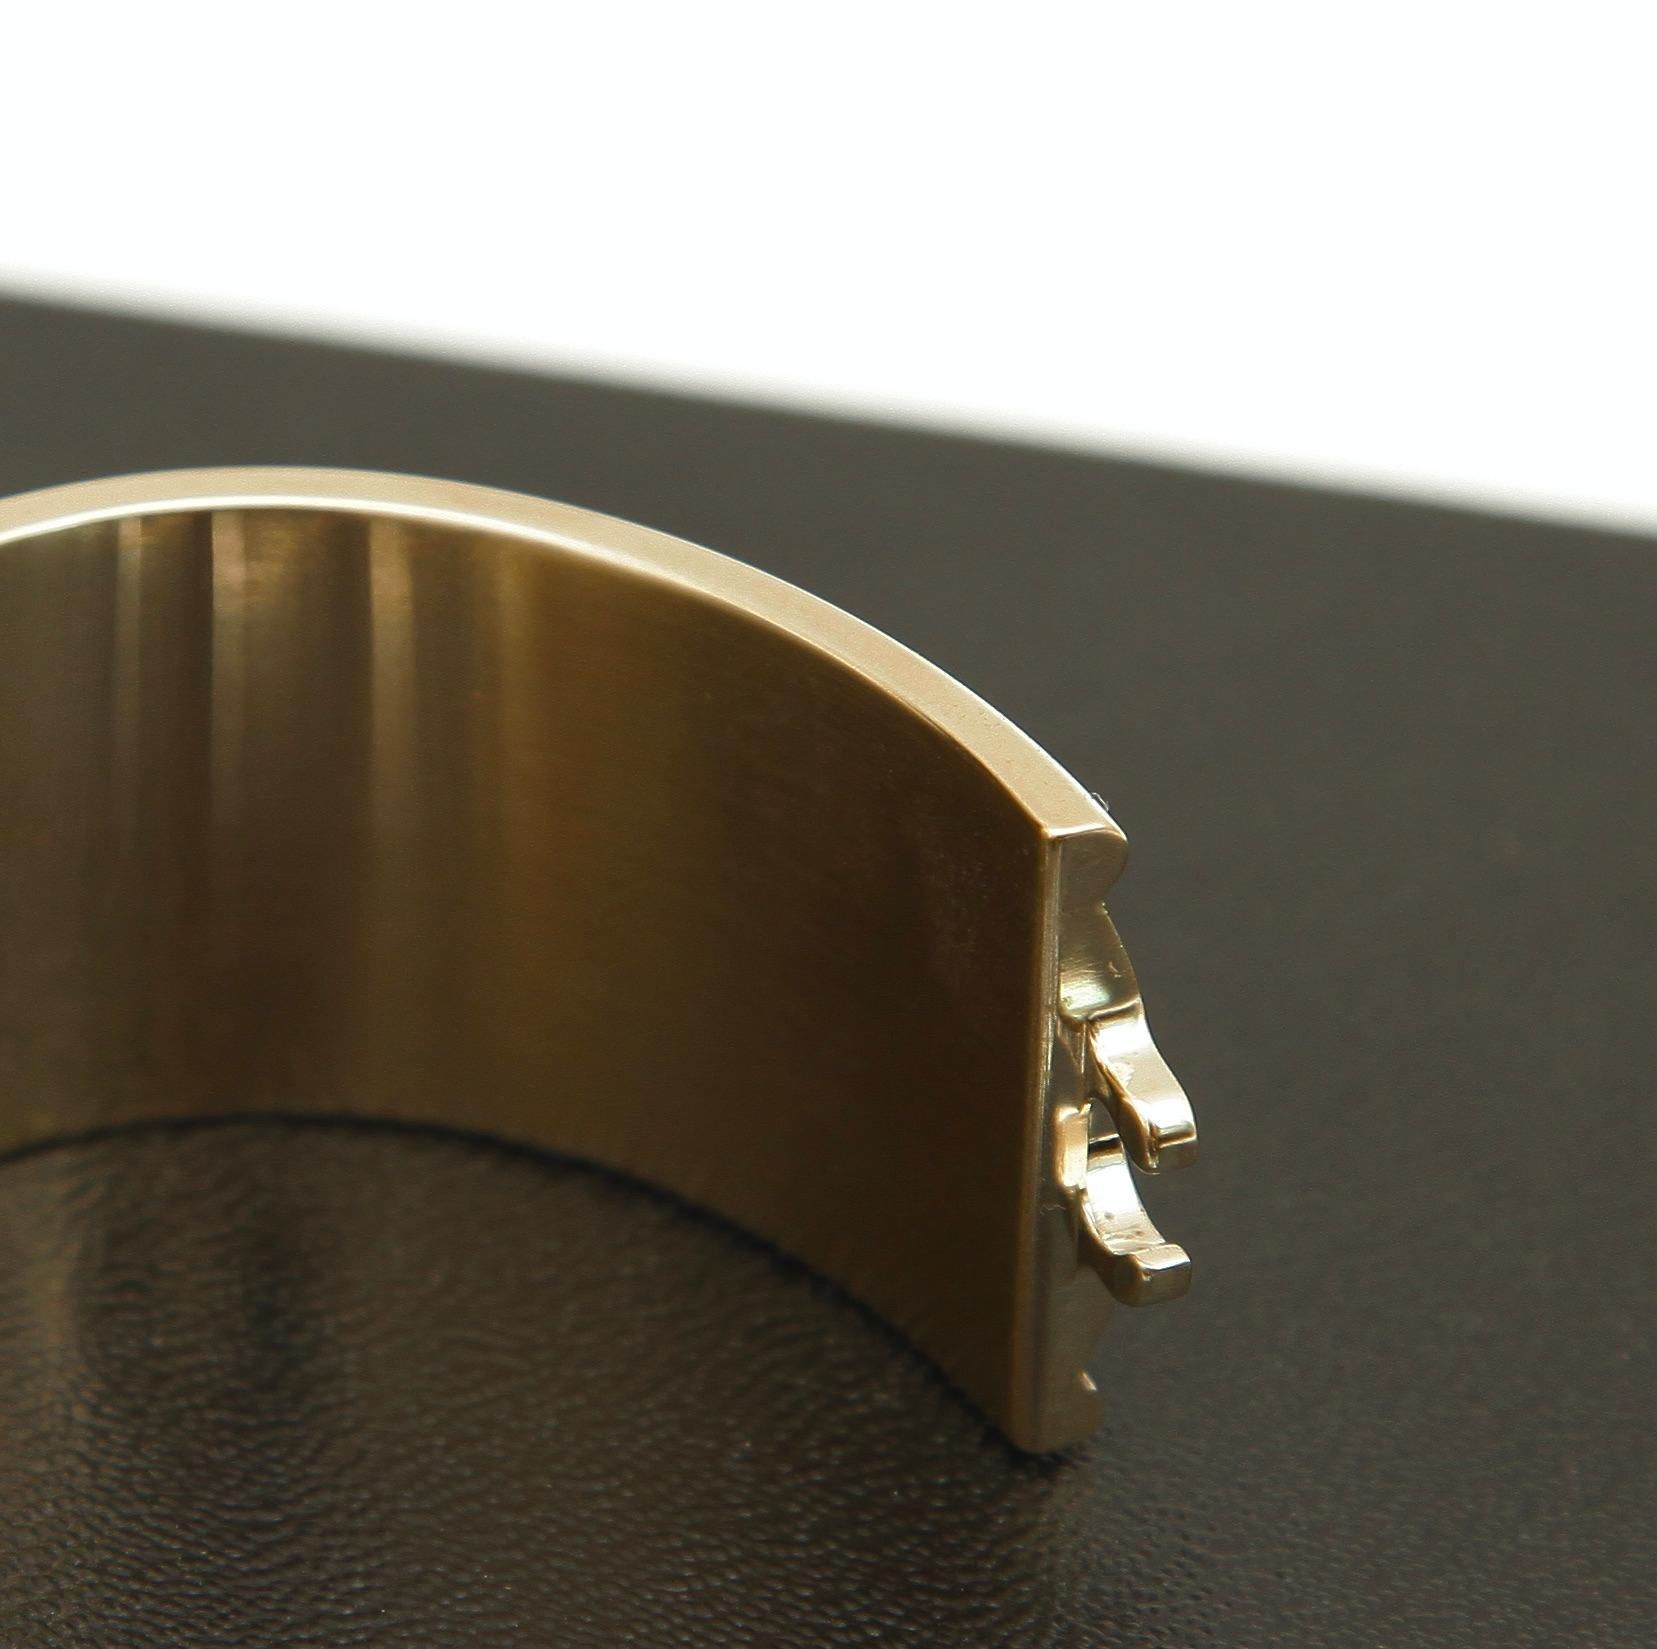 CHANEL Black Leather Cuff Bracelet Bangle Gold HW CC Turnlock Wider 21S 2021 1